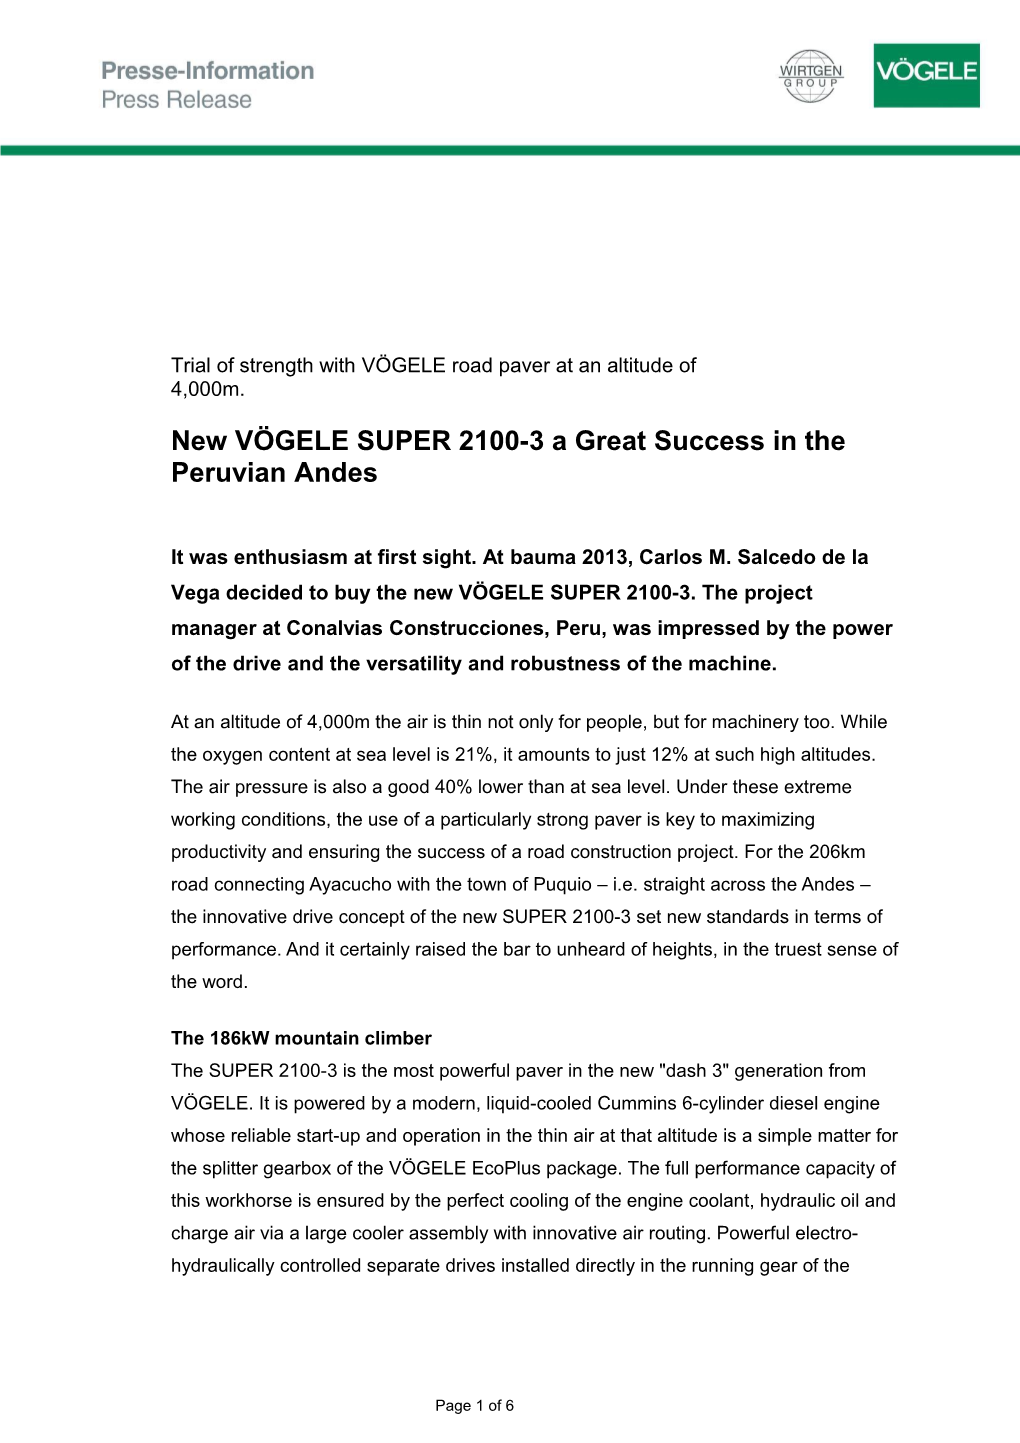 New VÖGELE SUPER 2100-3 a Great Success in the Peruvian Andes